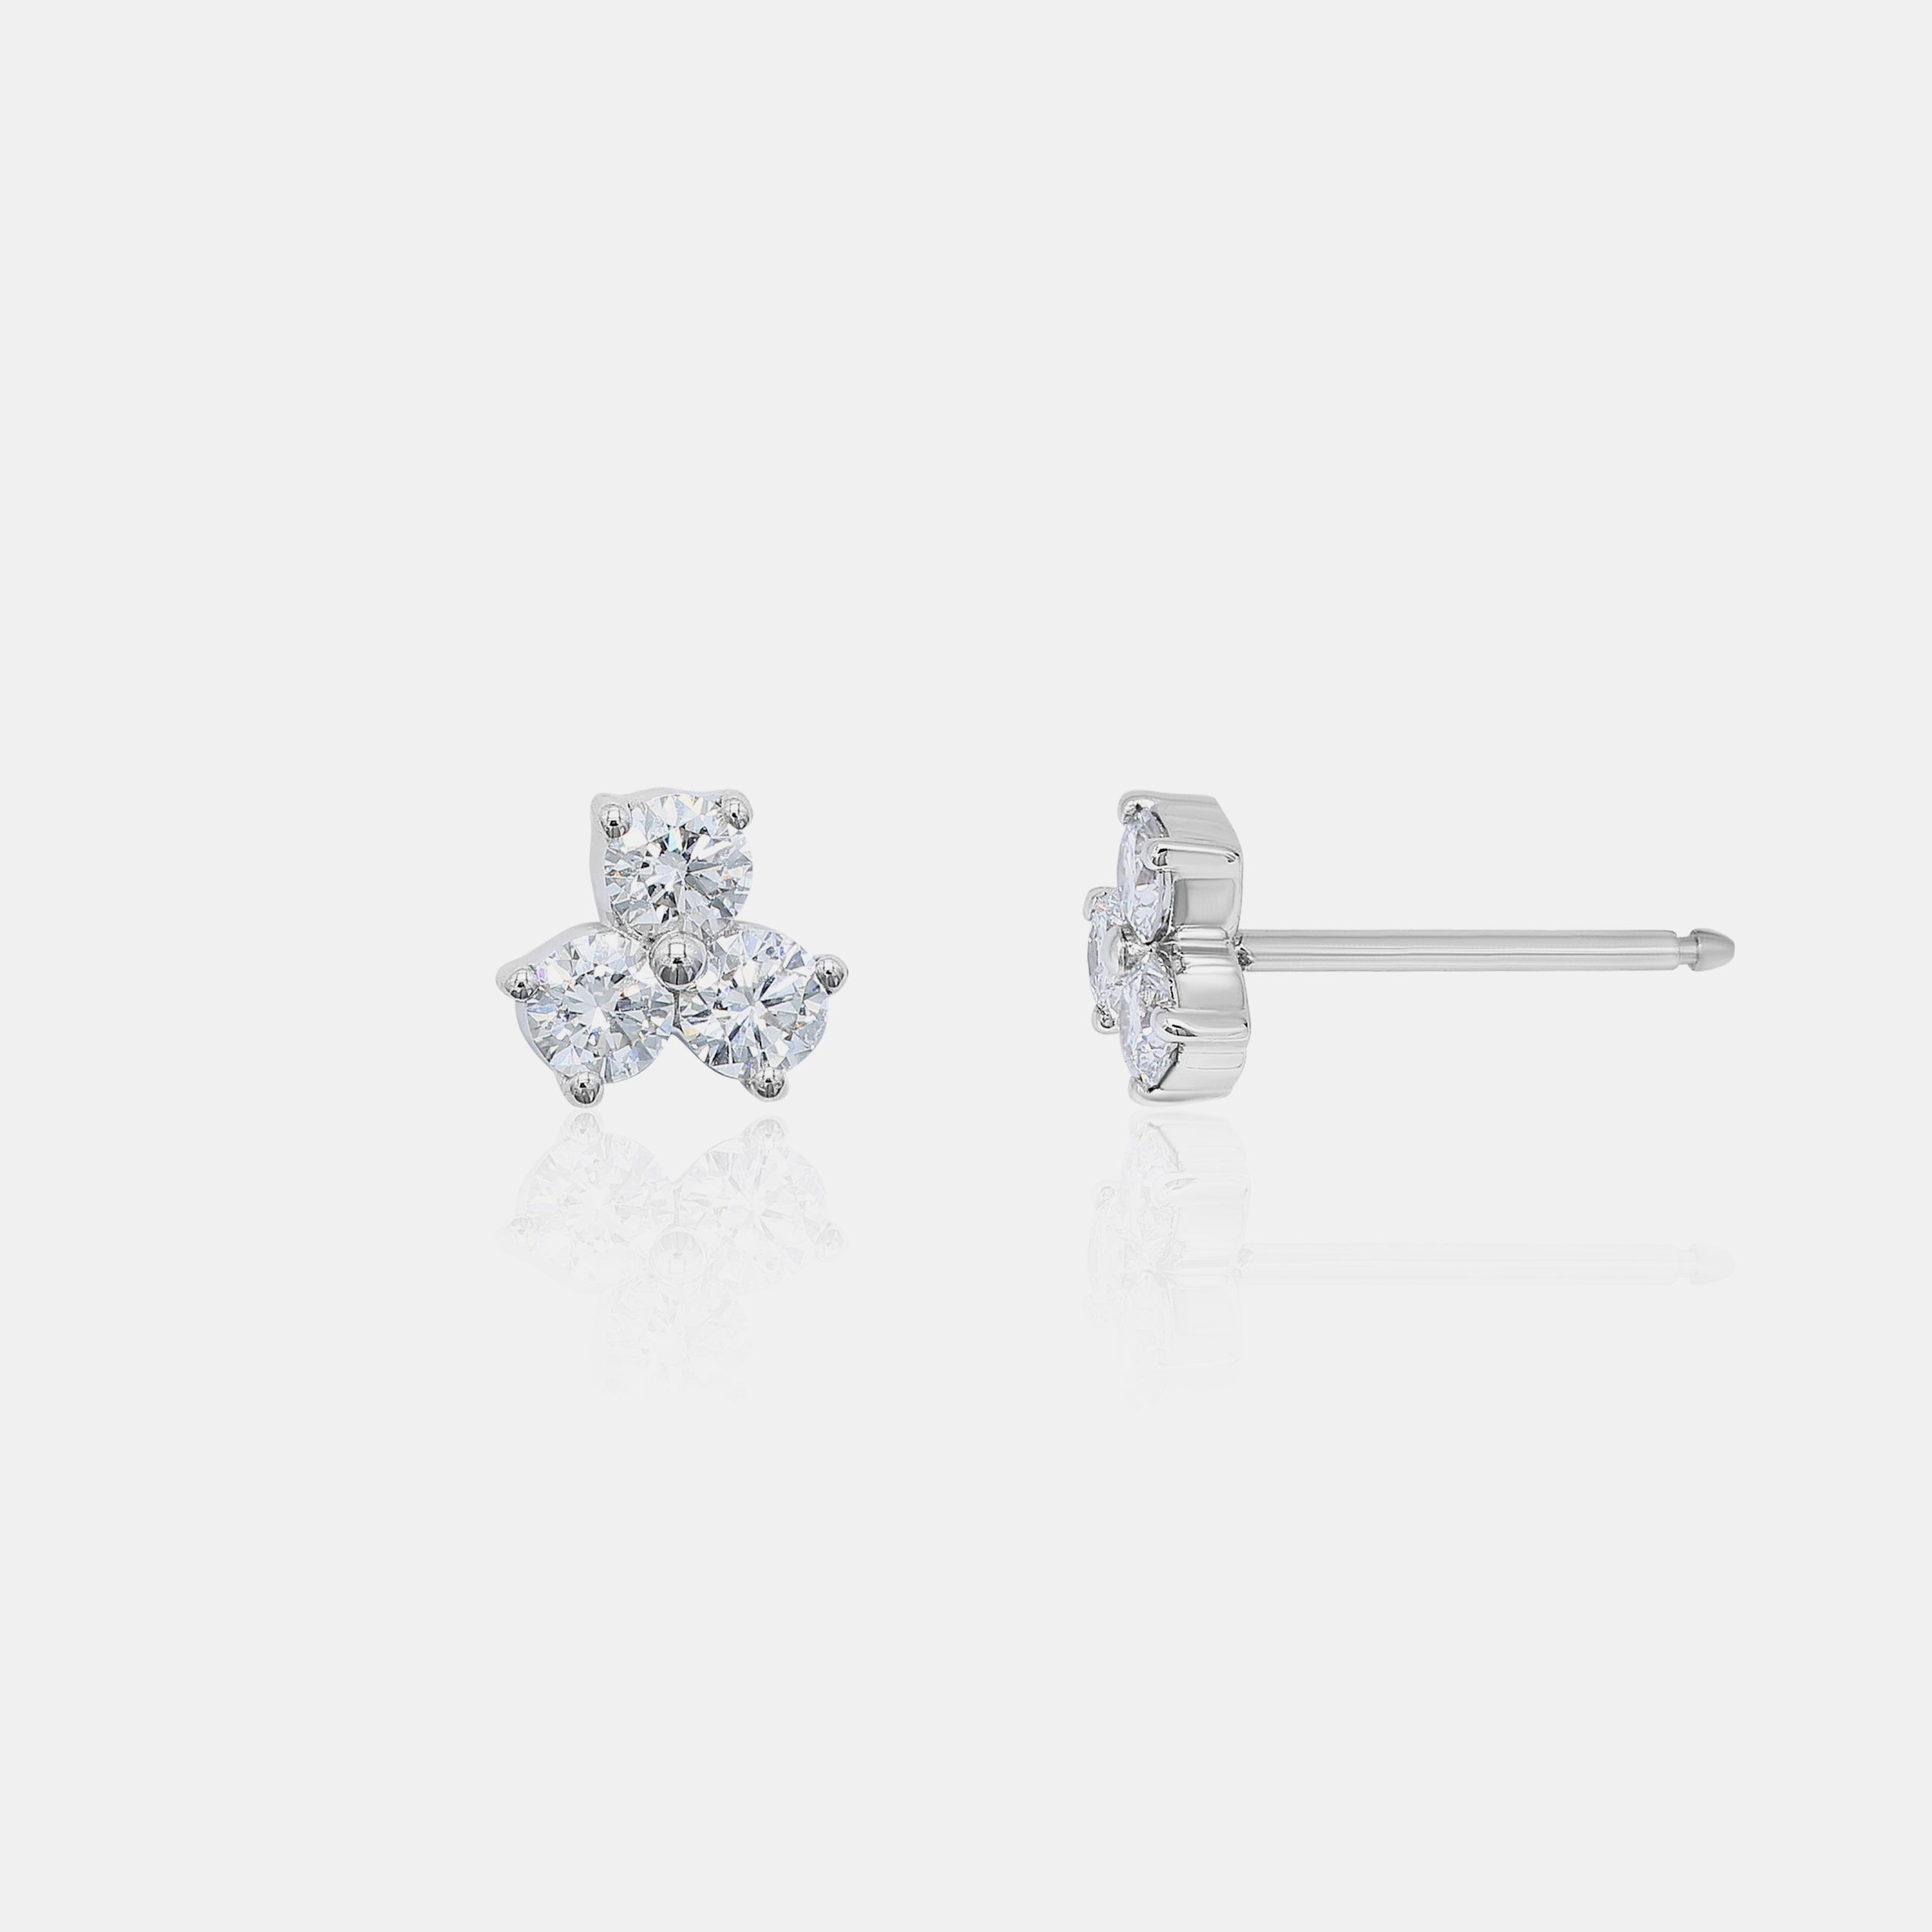 Diamond earring studs